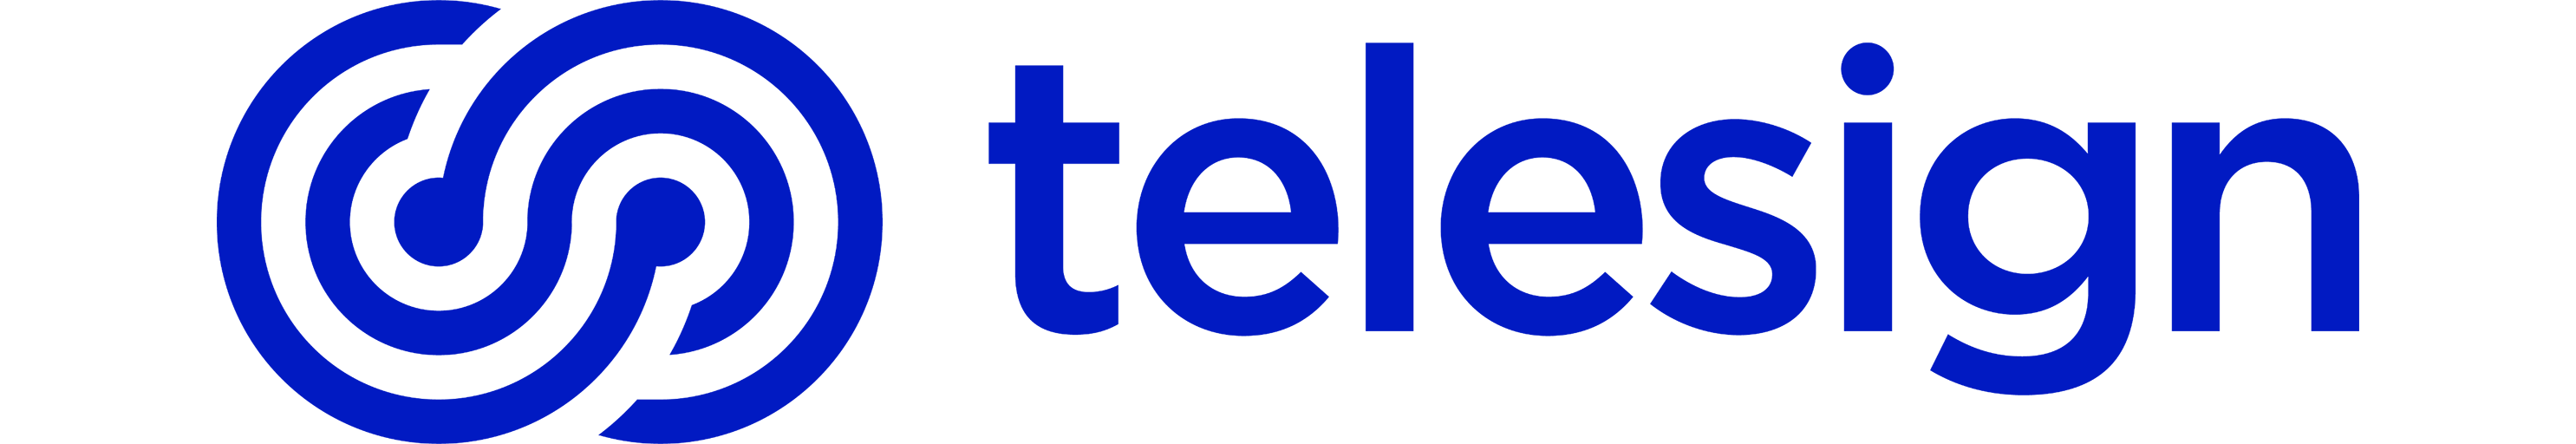 telesign_logo